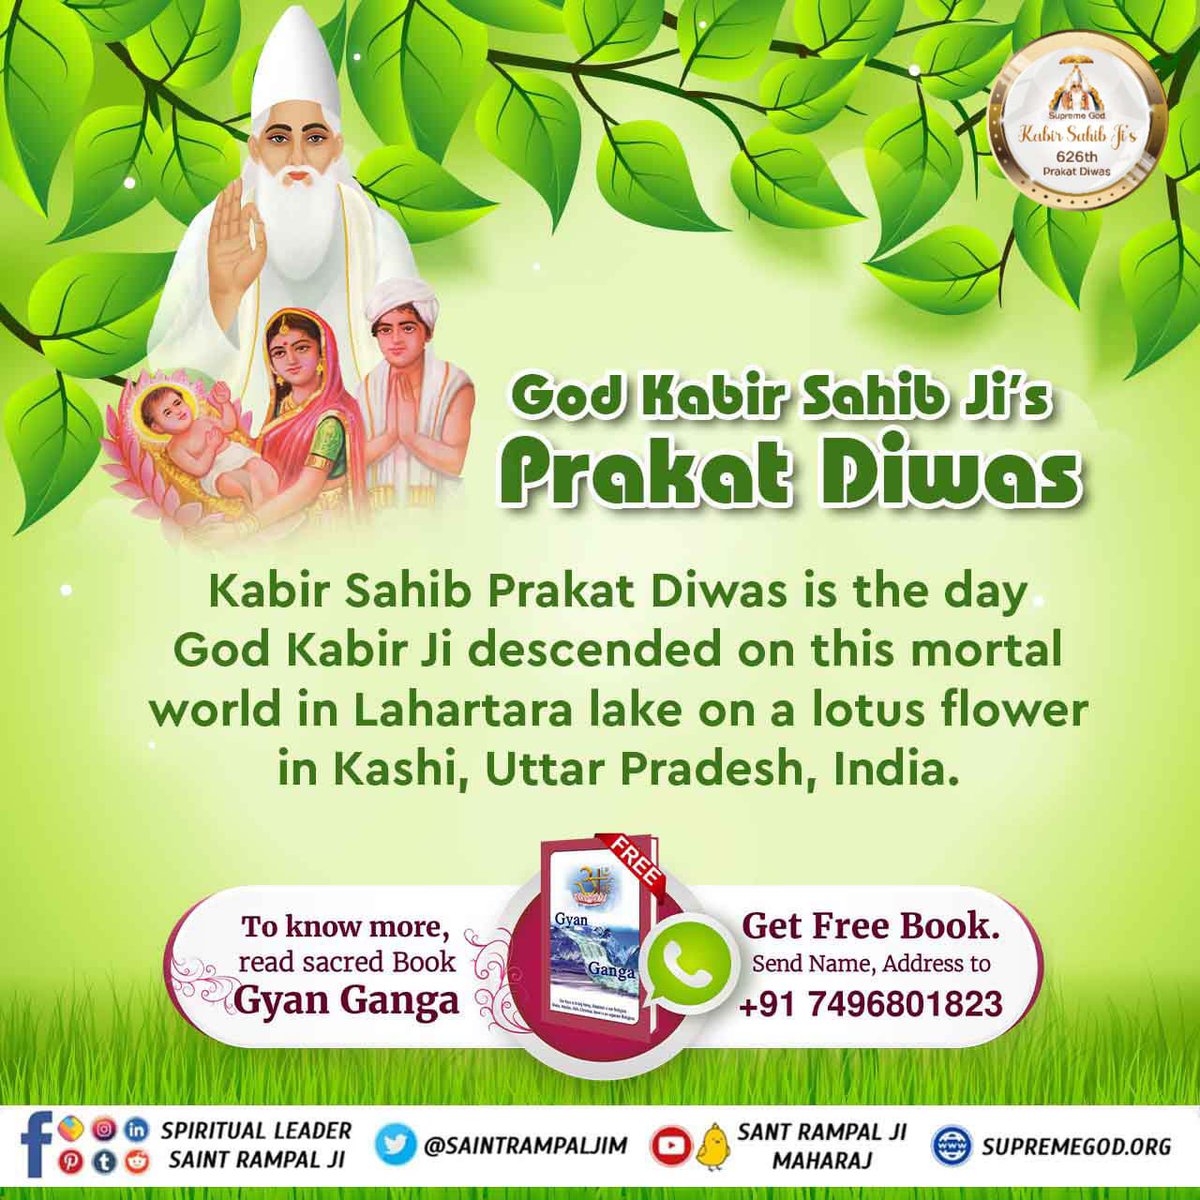 #कबीरजी_का_कलयुगमें_प्राकट्य
Kabir Sahib Prakat Diwas is the day God Kabir Ji descended on this mortal world in Lahartara lake on a lotus flower in Kashi, Uttar Pradesh, India.3 Days Left Kabir Prakat Diwas @SaintRampalJiM